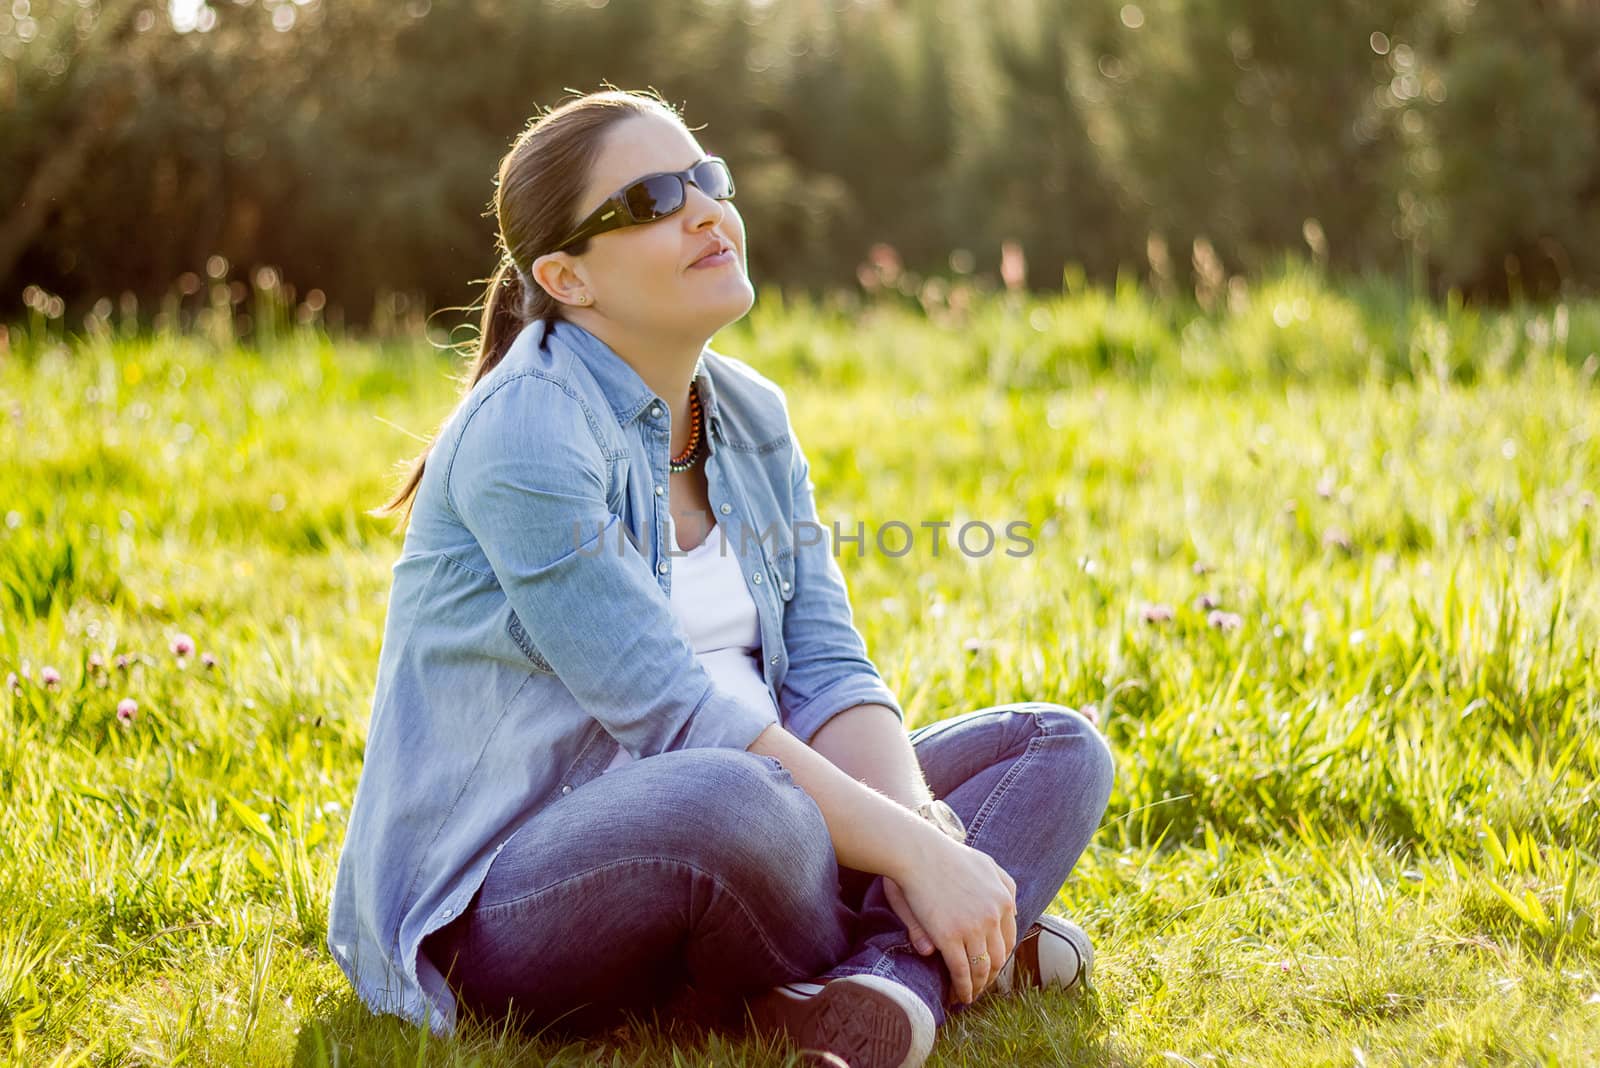 Smiling woman sunbathing sitting in a field by doble.d